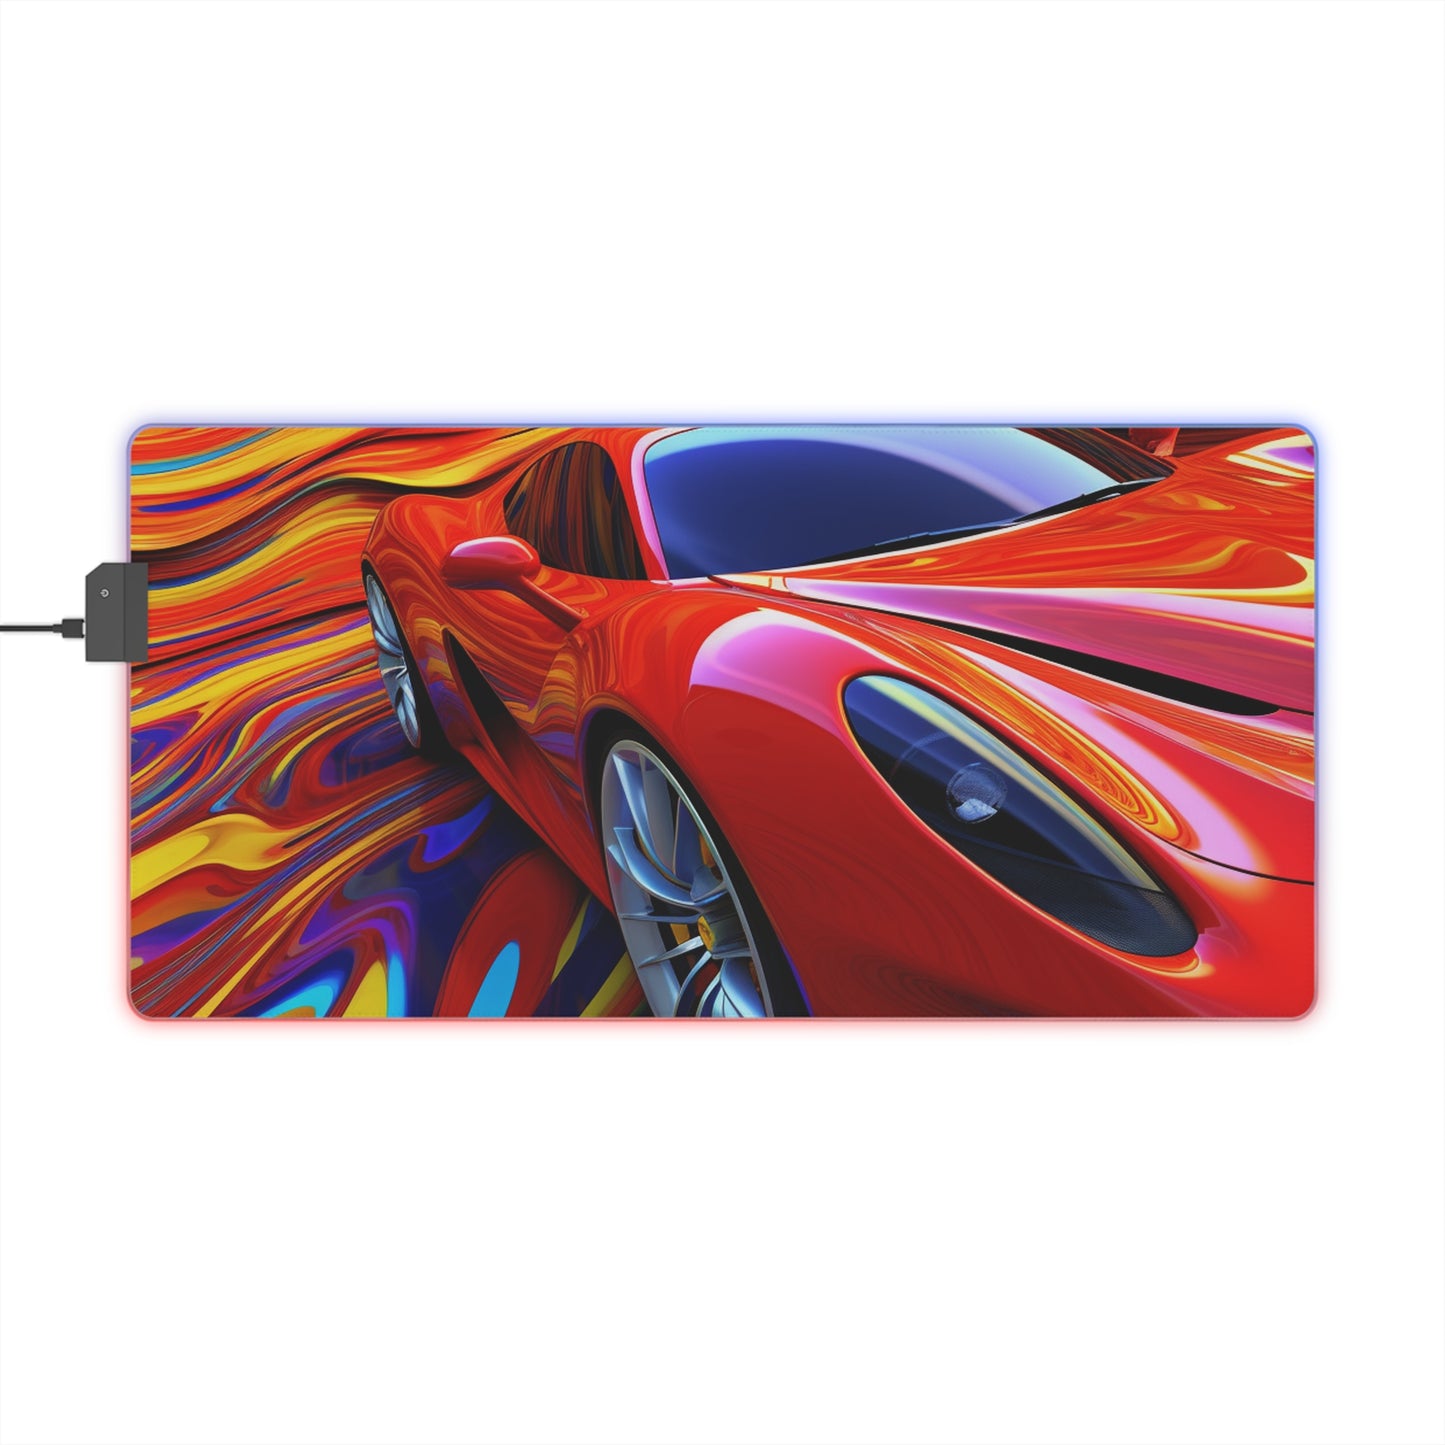 LED Gaming Mouse Pad Ferrari Water Fusion 4